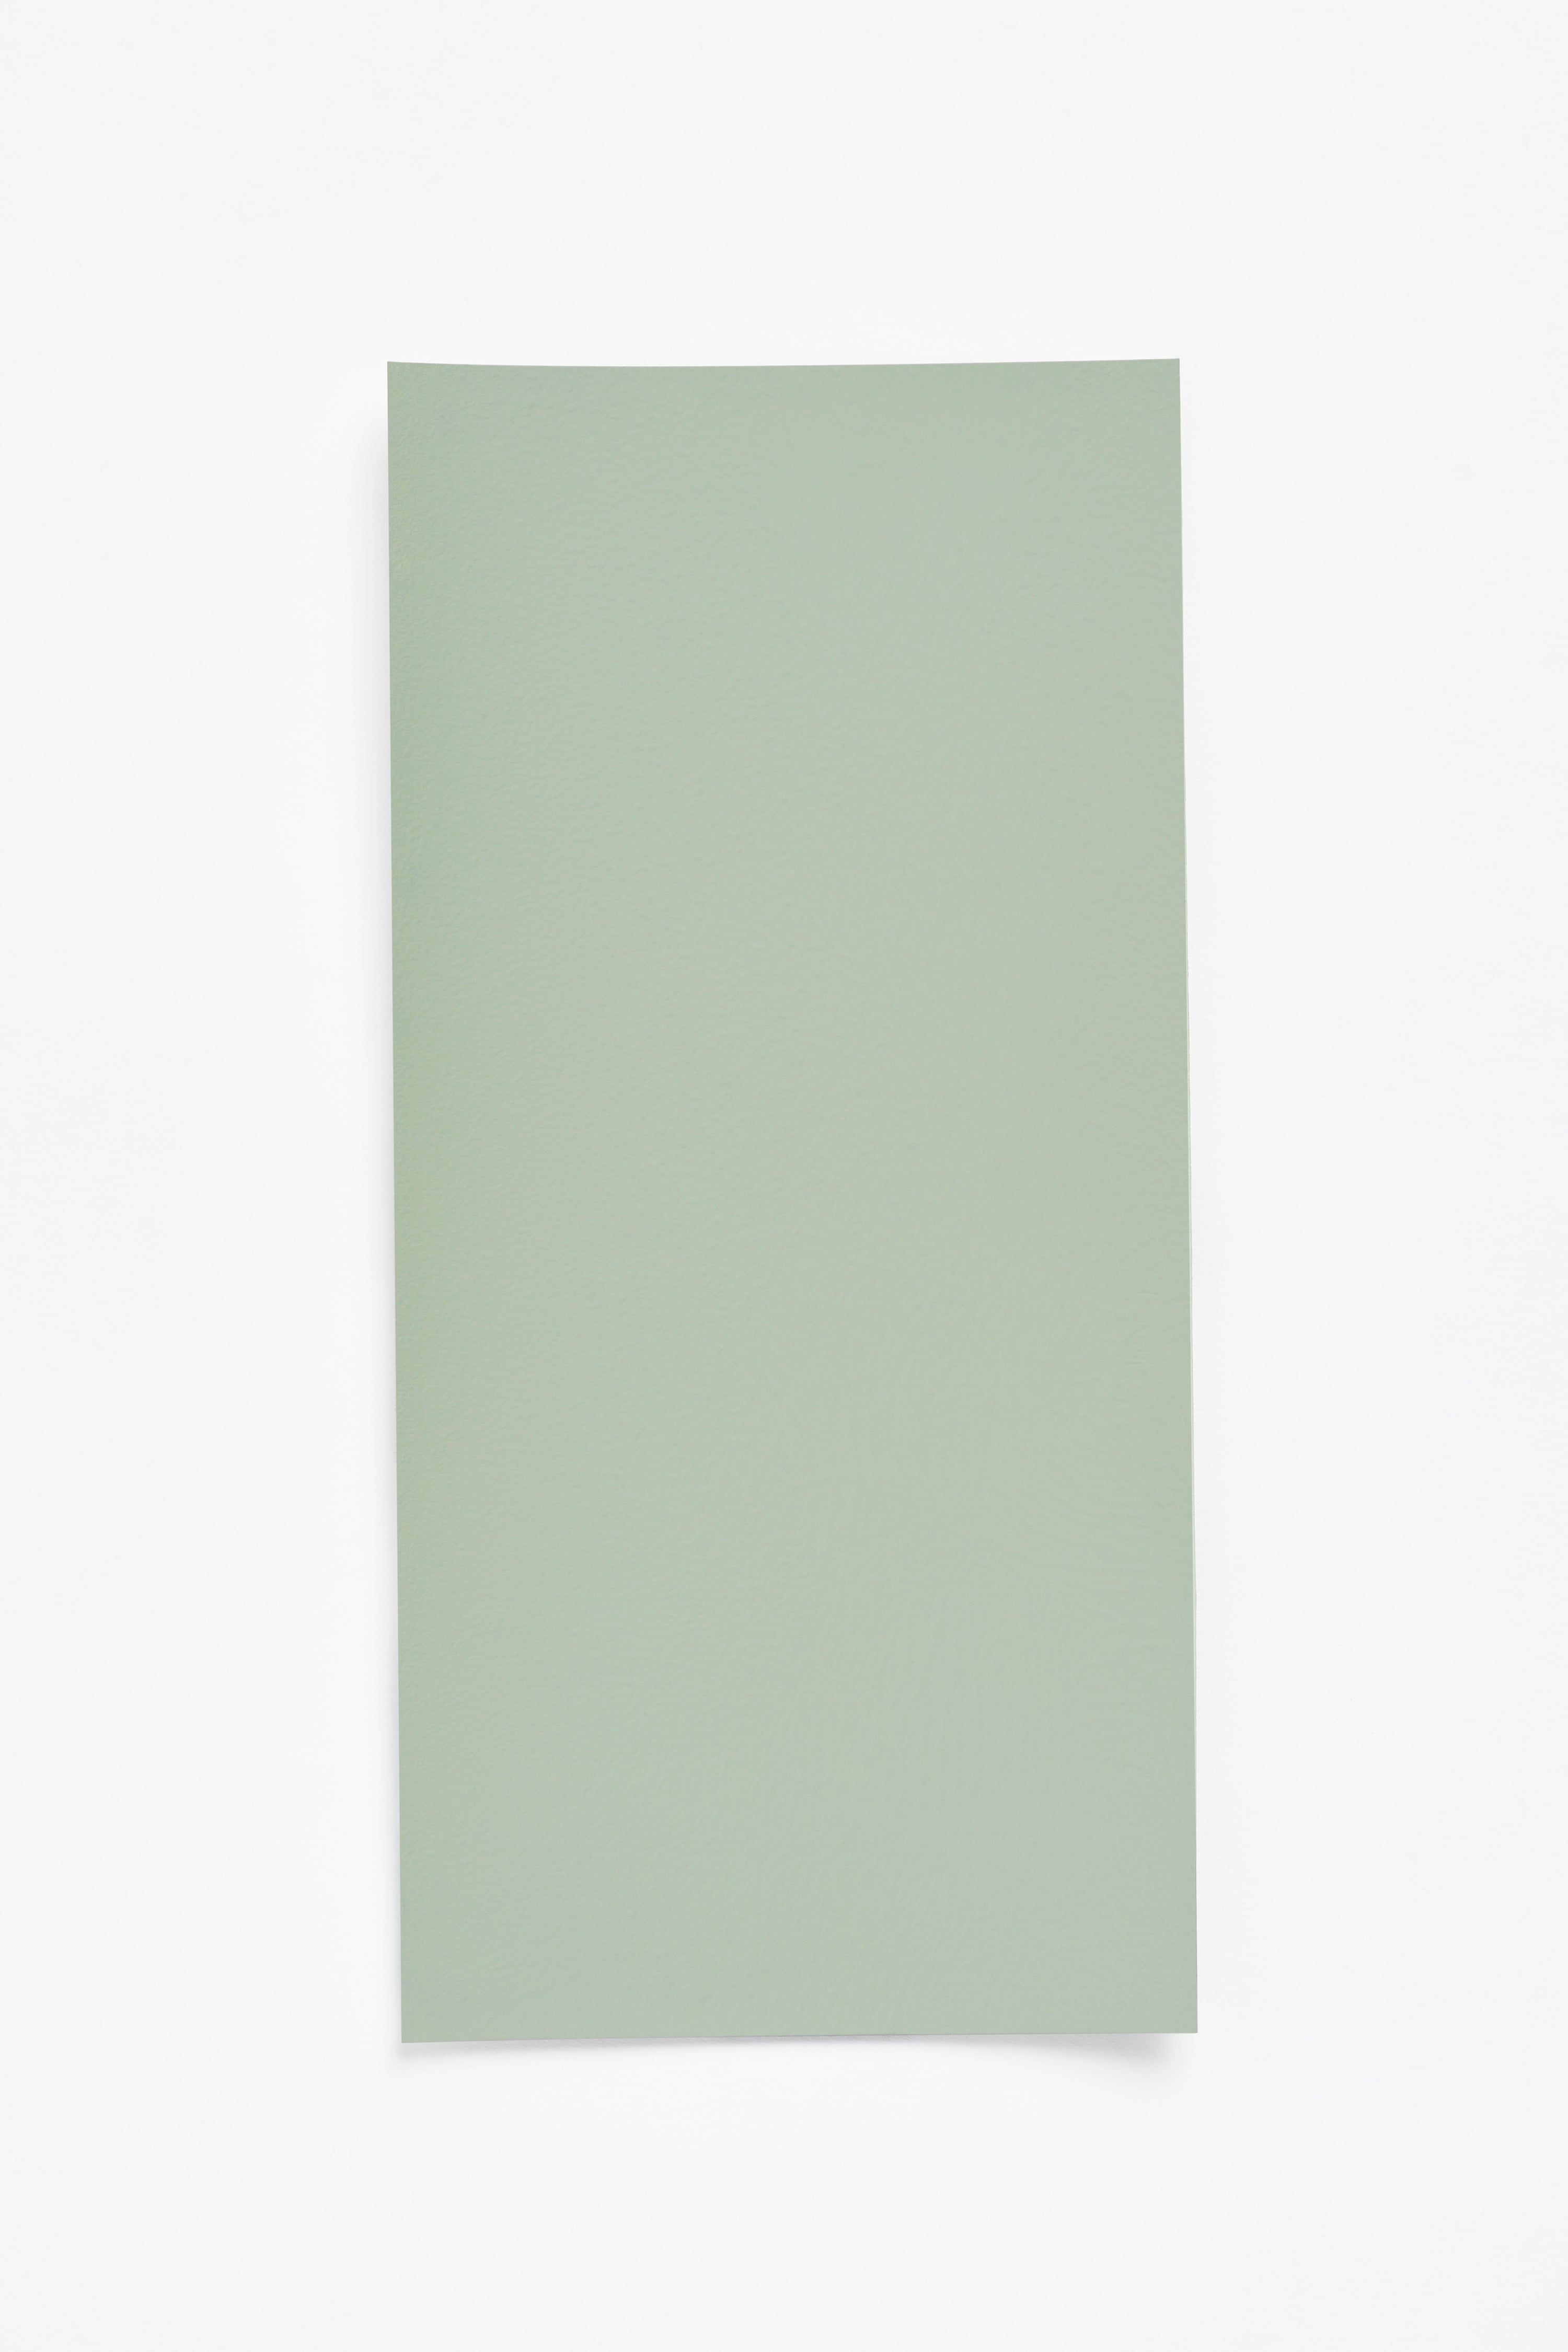 Chromium Light — a paint colour developed by Barber Osgerby for Blēo